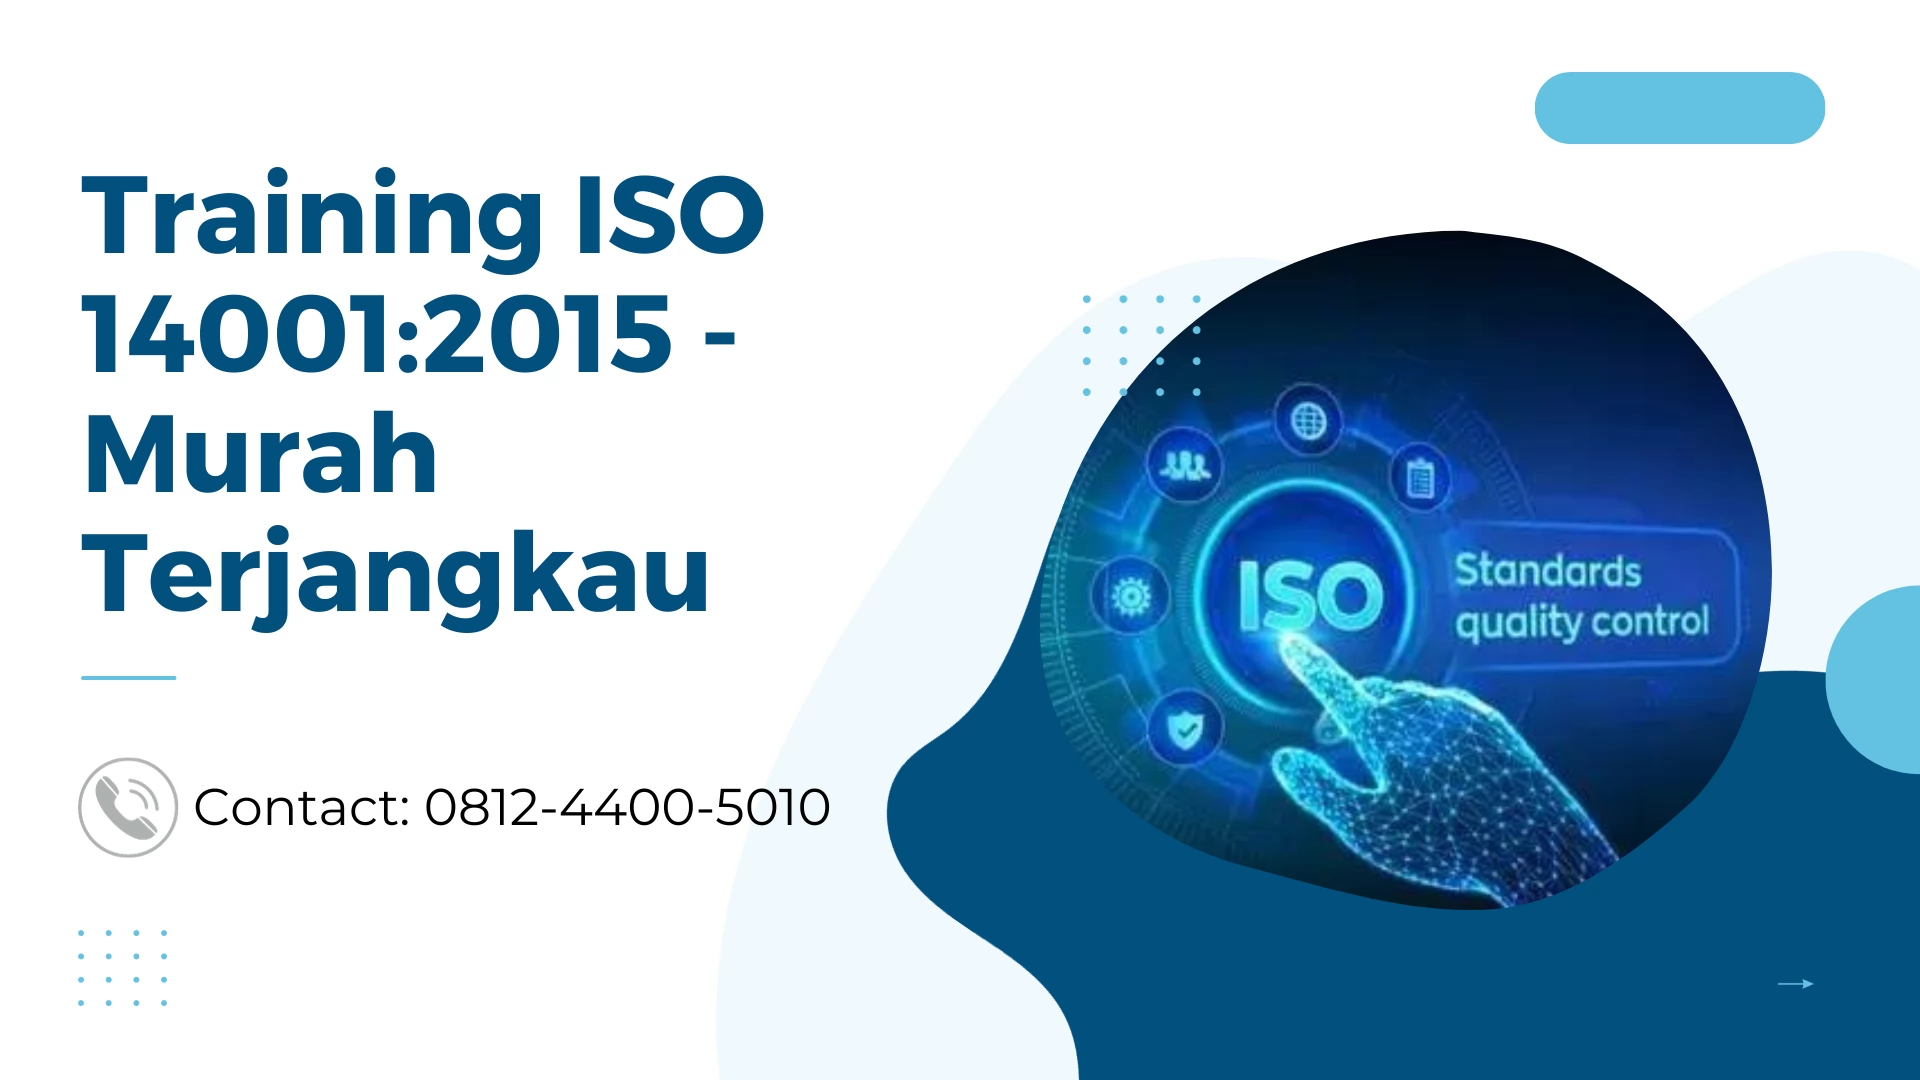 Training ISO 14001:2015 - Murah Terjangkau